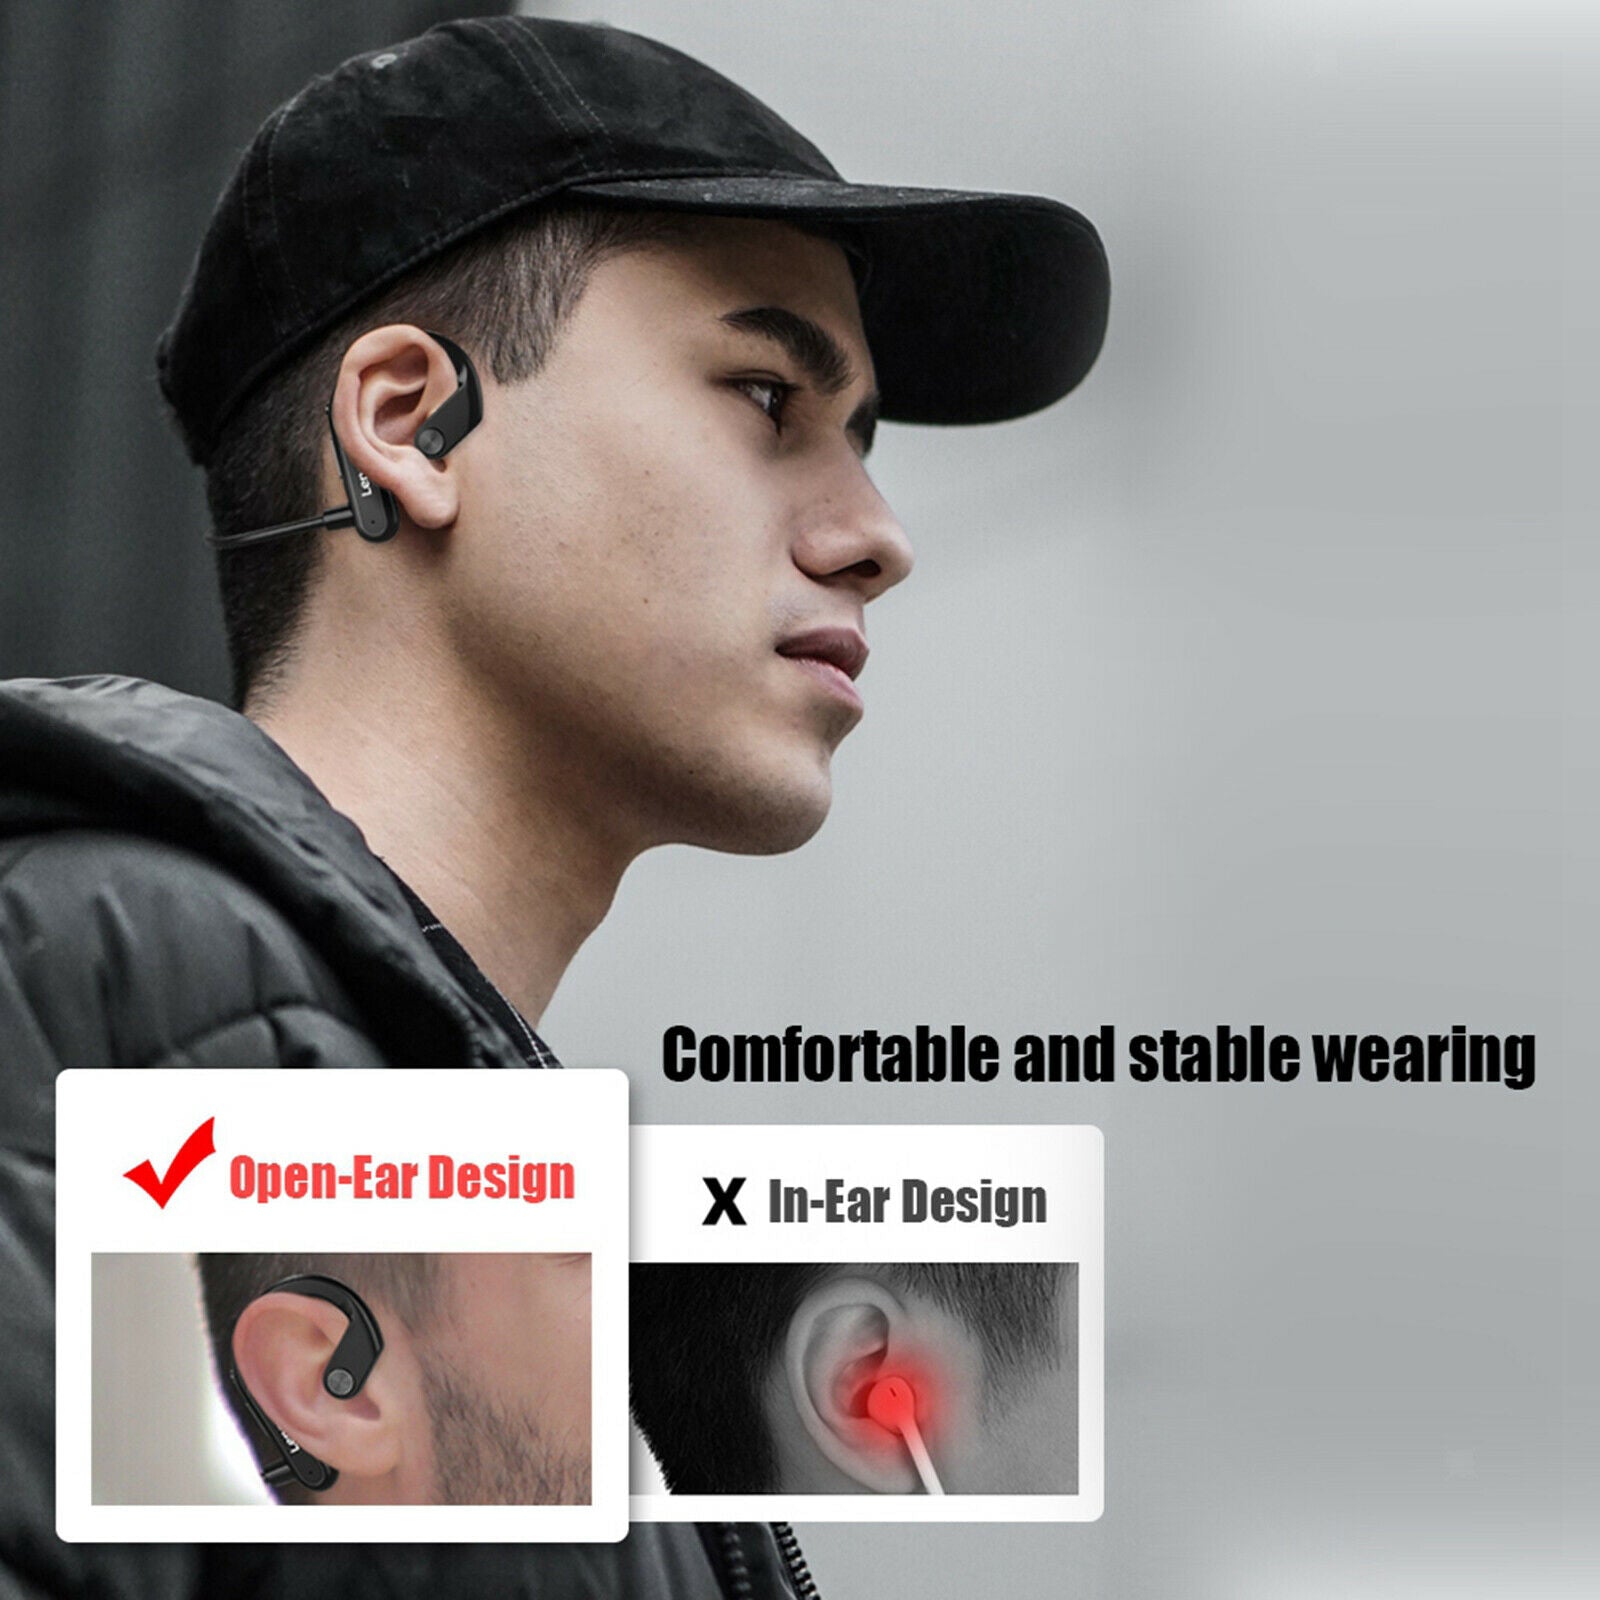 X3 Bone Conduction Headphones Bluetooth 5.0 Wireless for Running Sports